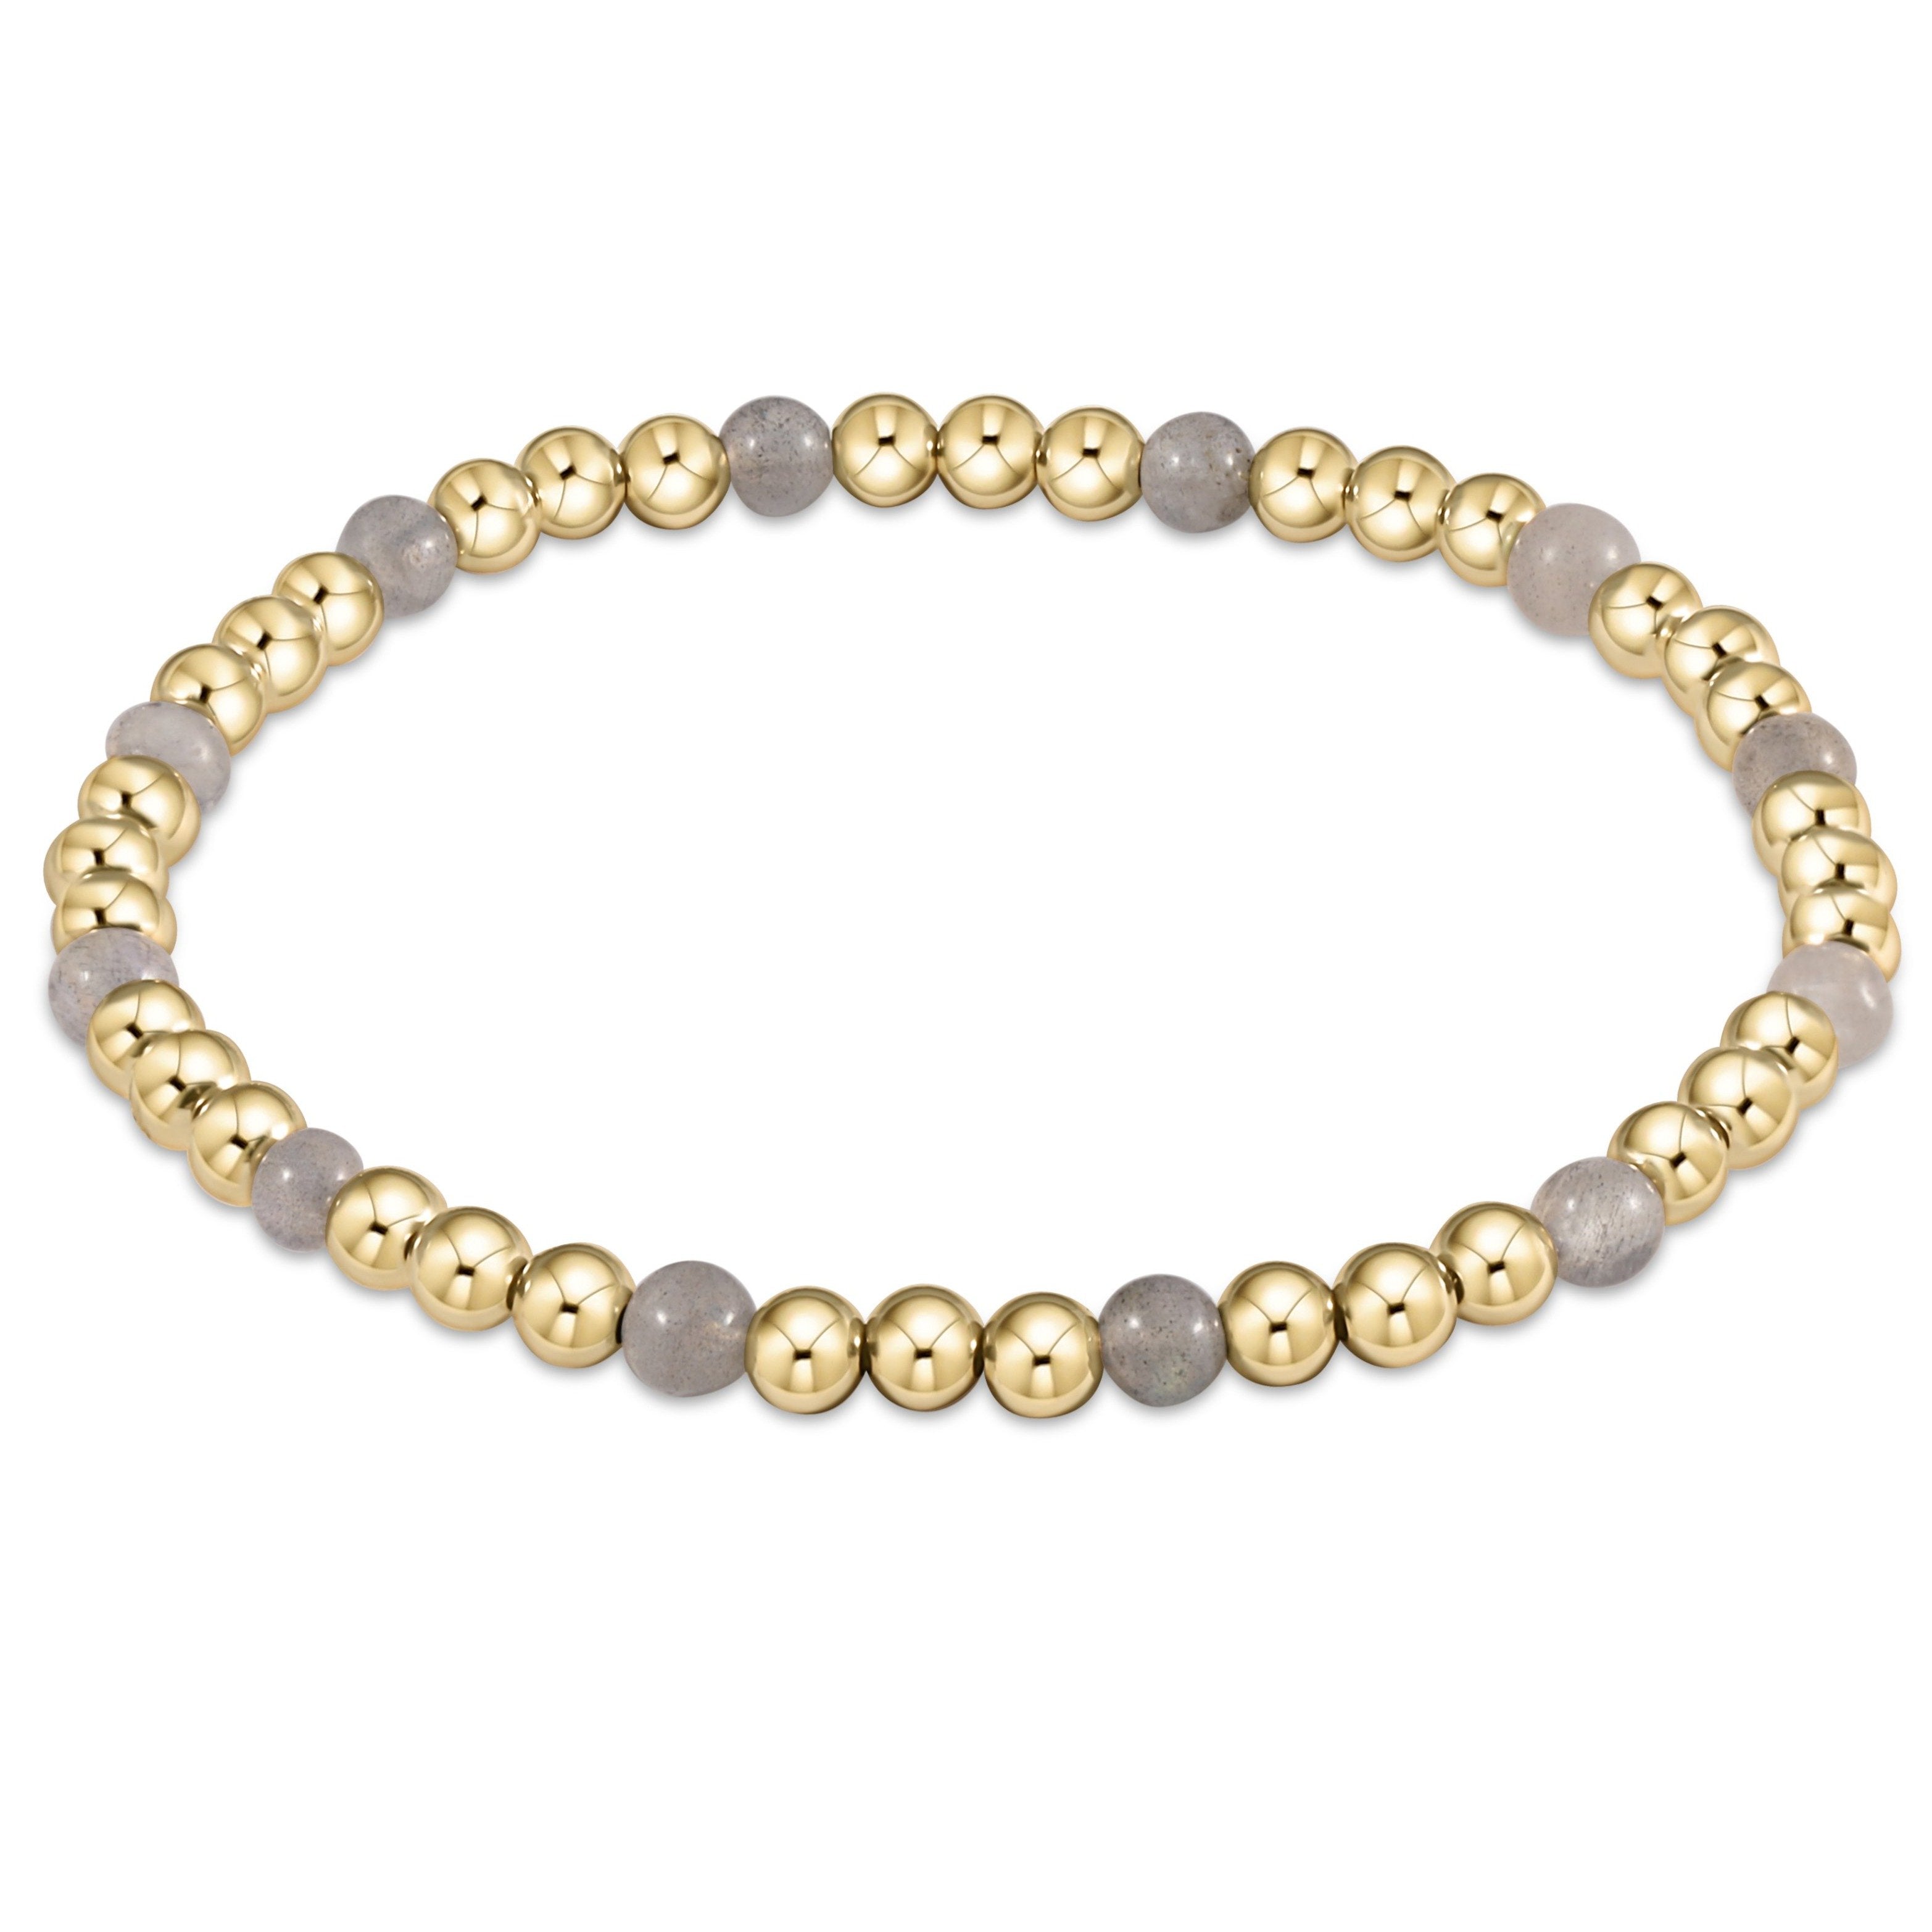 Sincerity Gold Bead Bracelet, 4mm - Labradorite